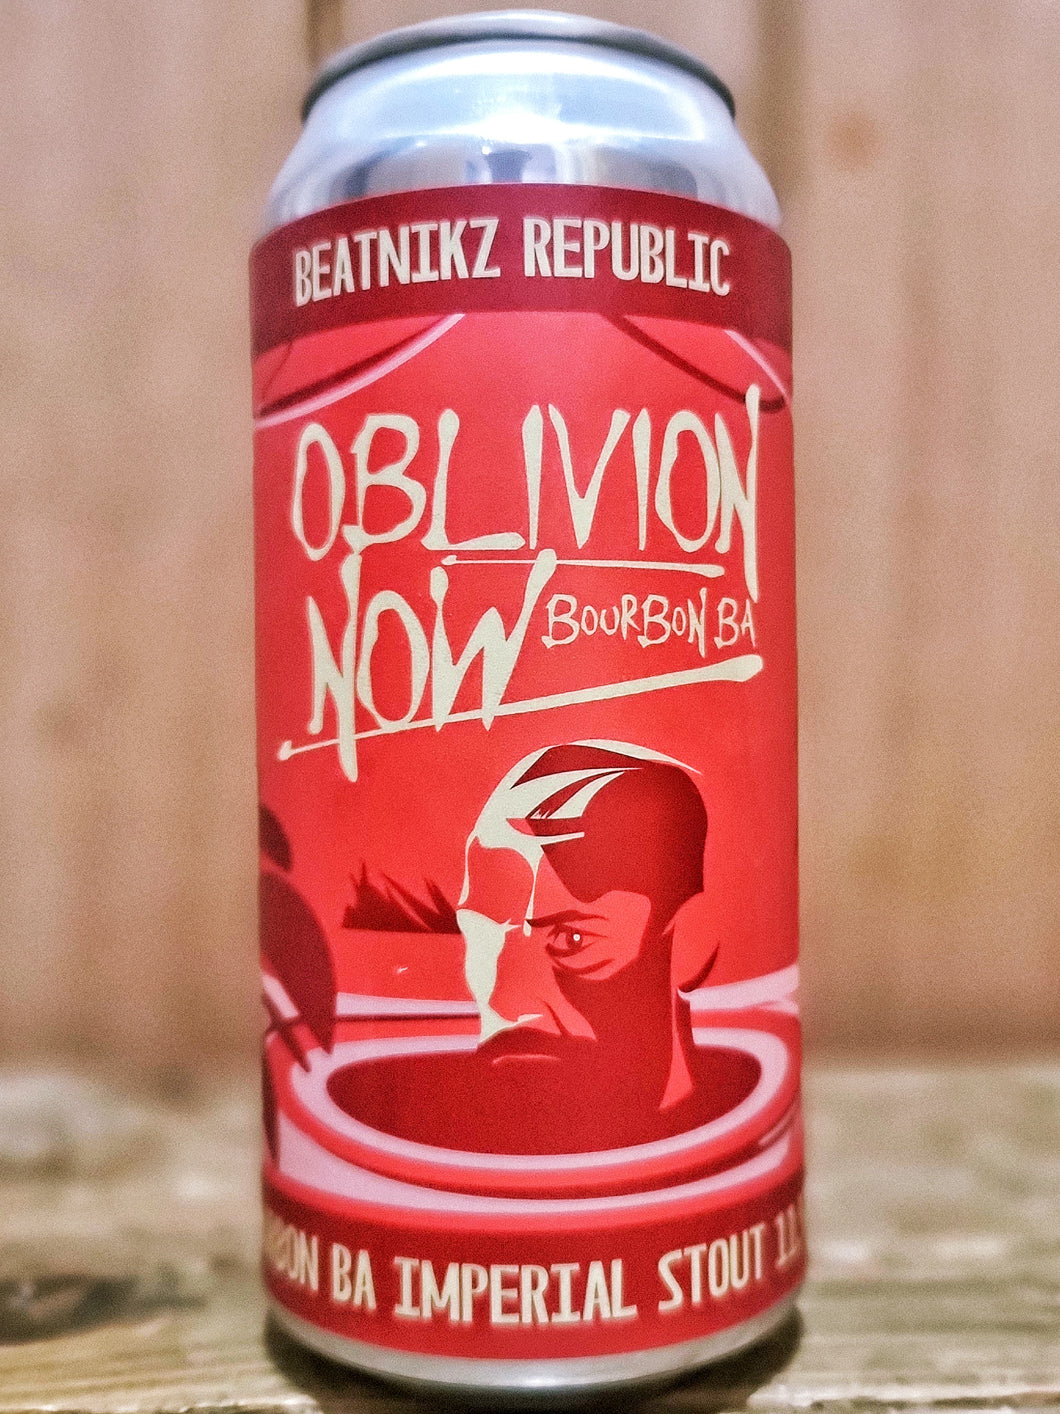 Beatnikz Republic - Bourbon BA Oblivion Now